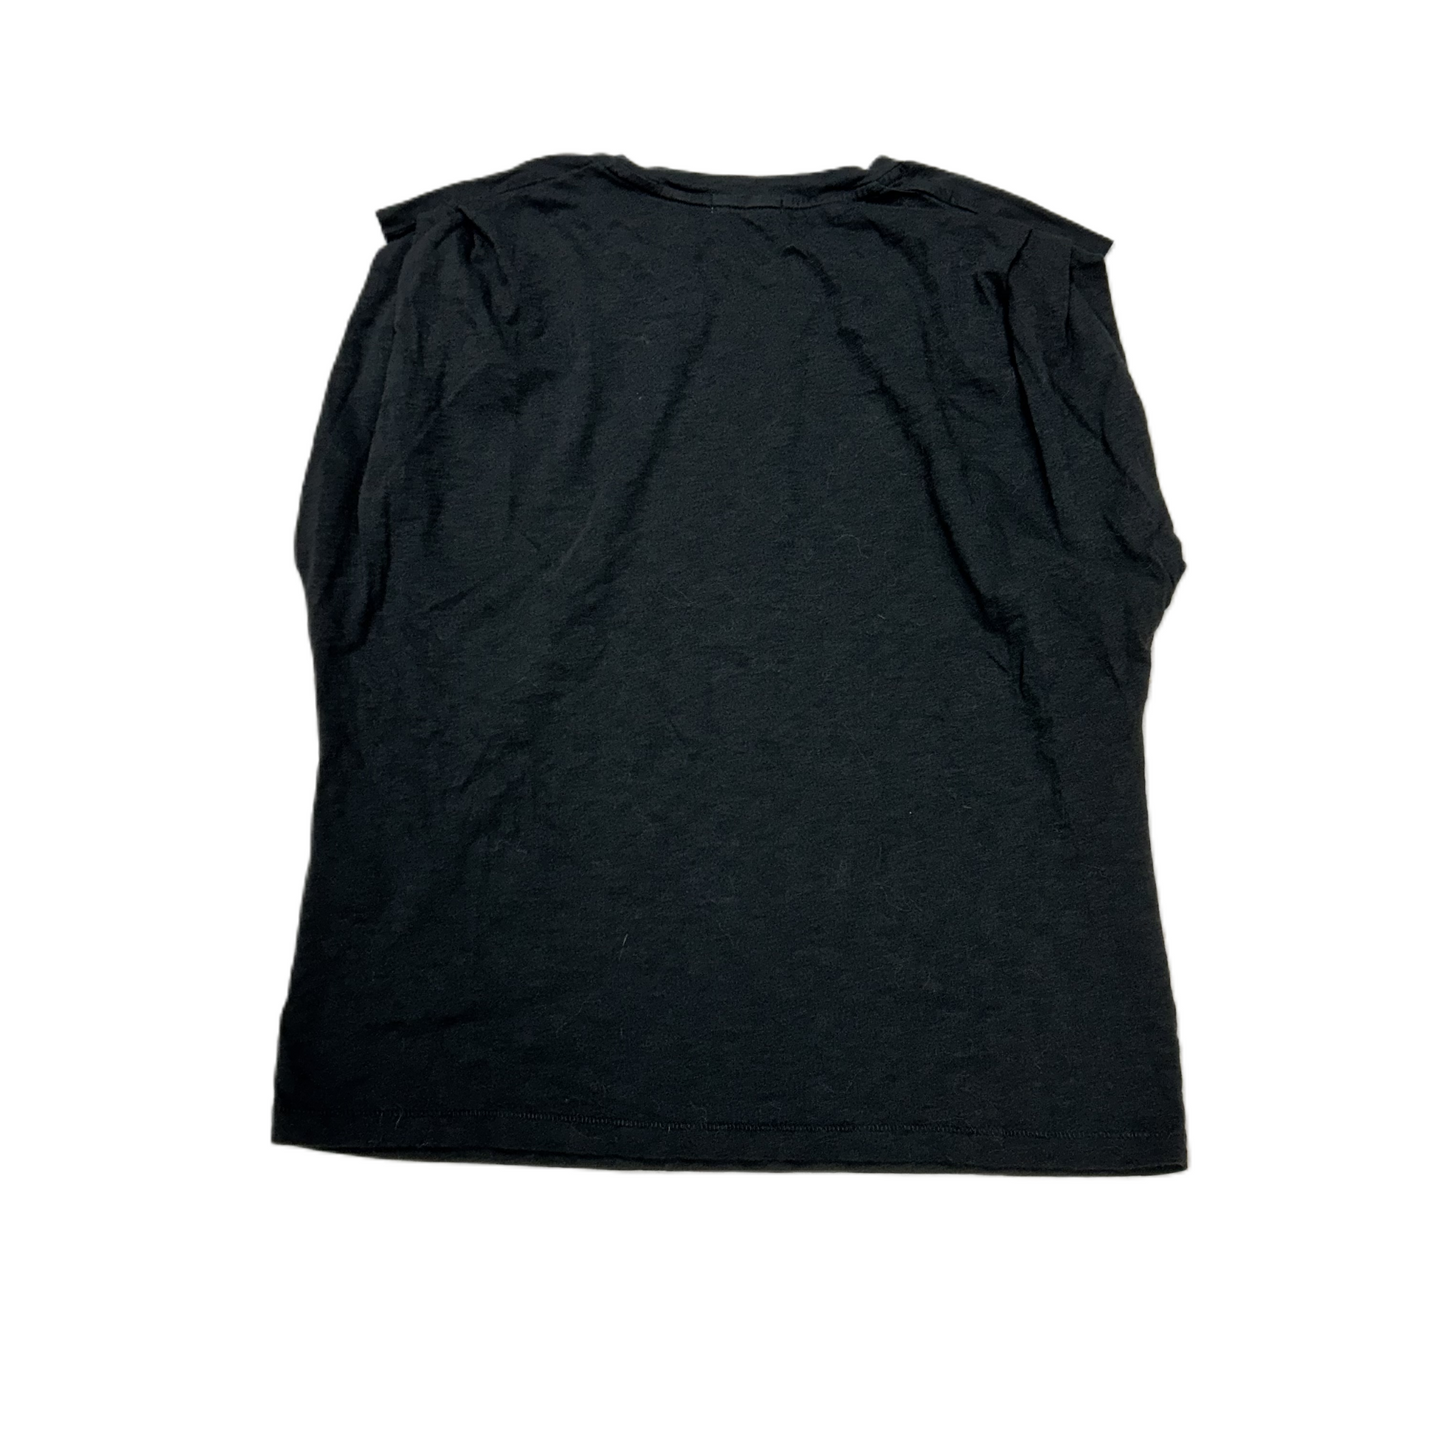 Black Top Short Sleeve Designer By Rag And Bone, Size: M